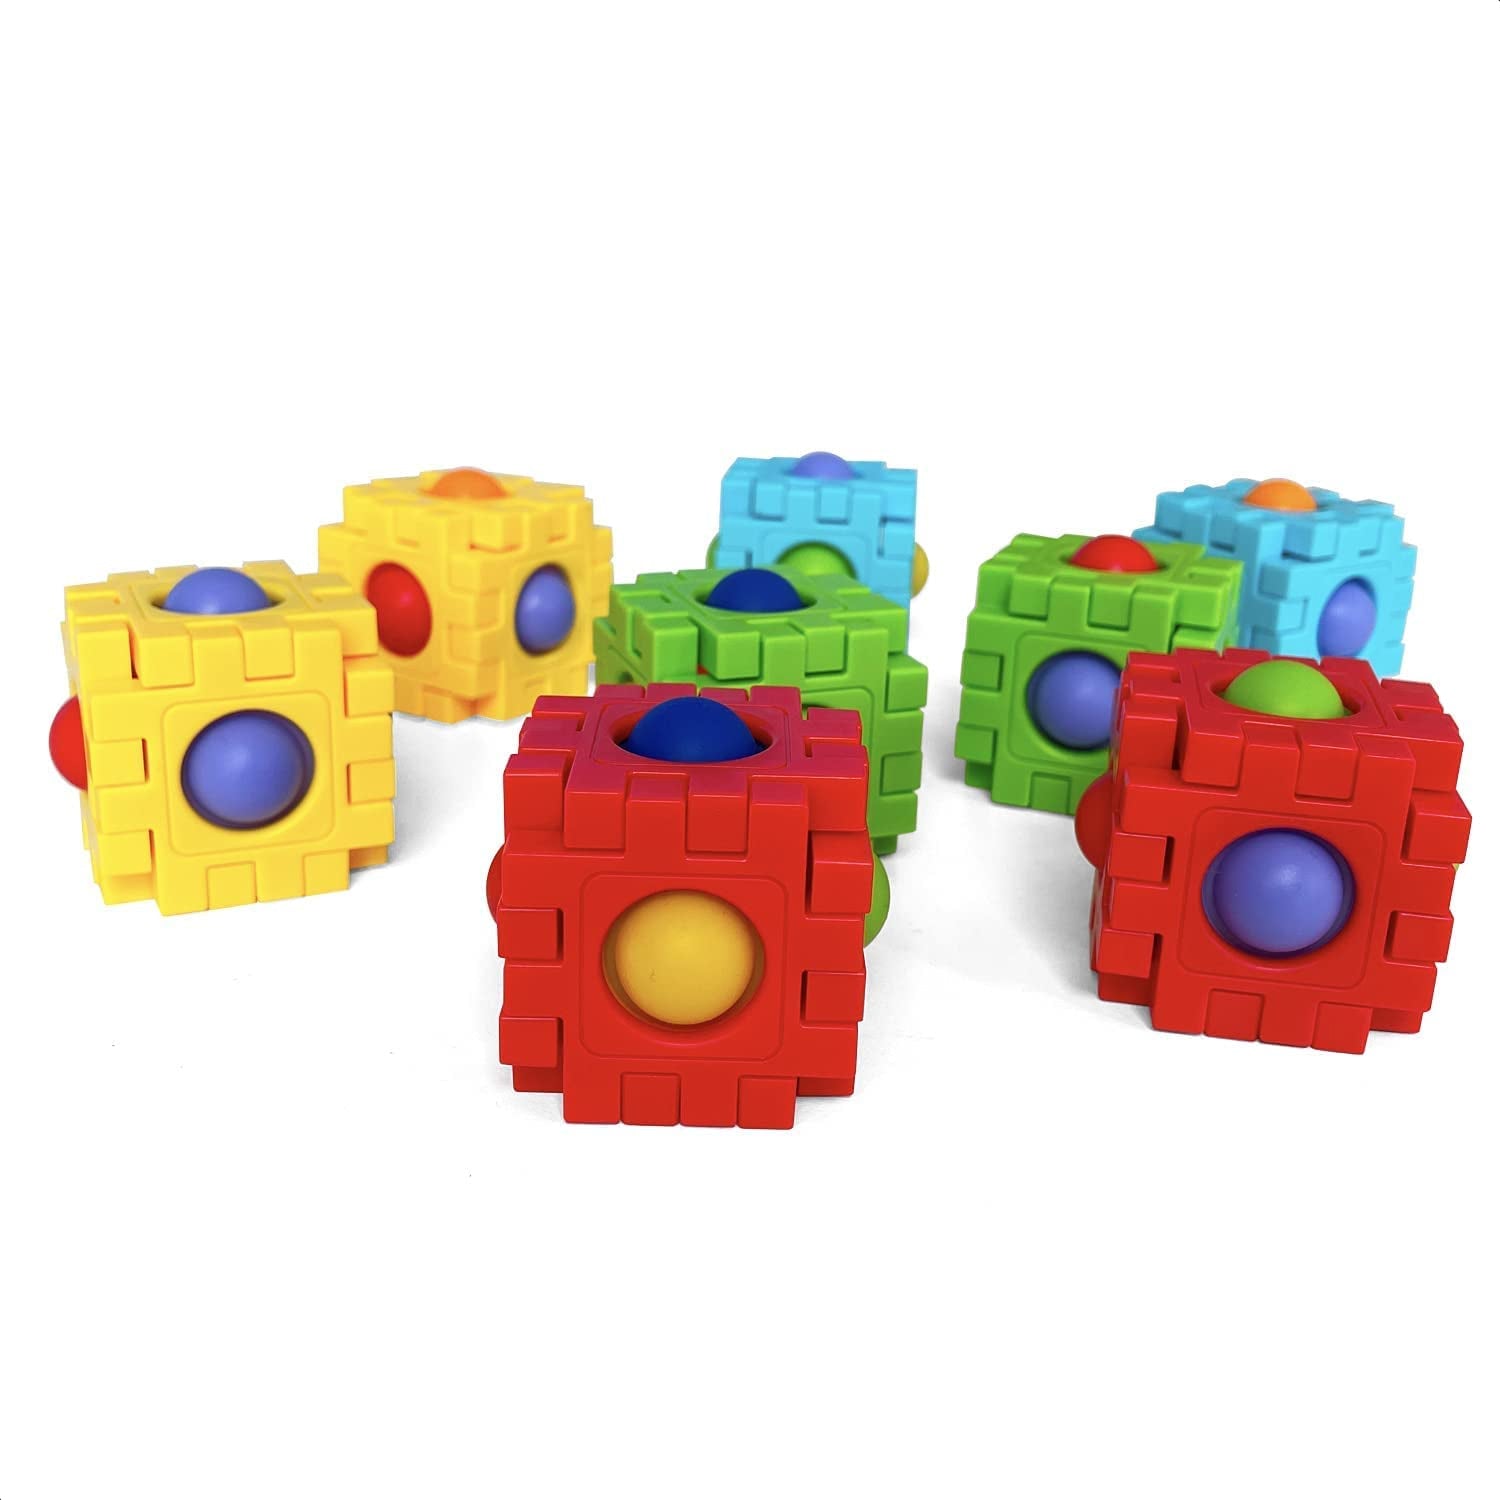 4473 Popit Building Blocks Toy For Kids & Adult Use ( 28 pcs Product ) DeoDap